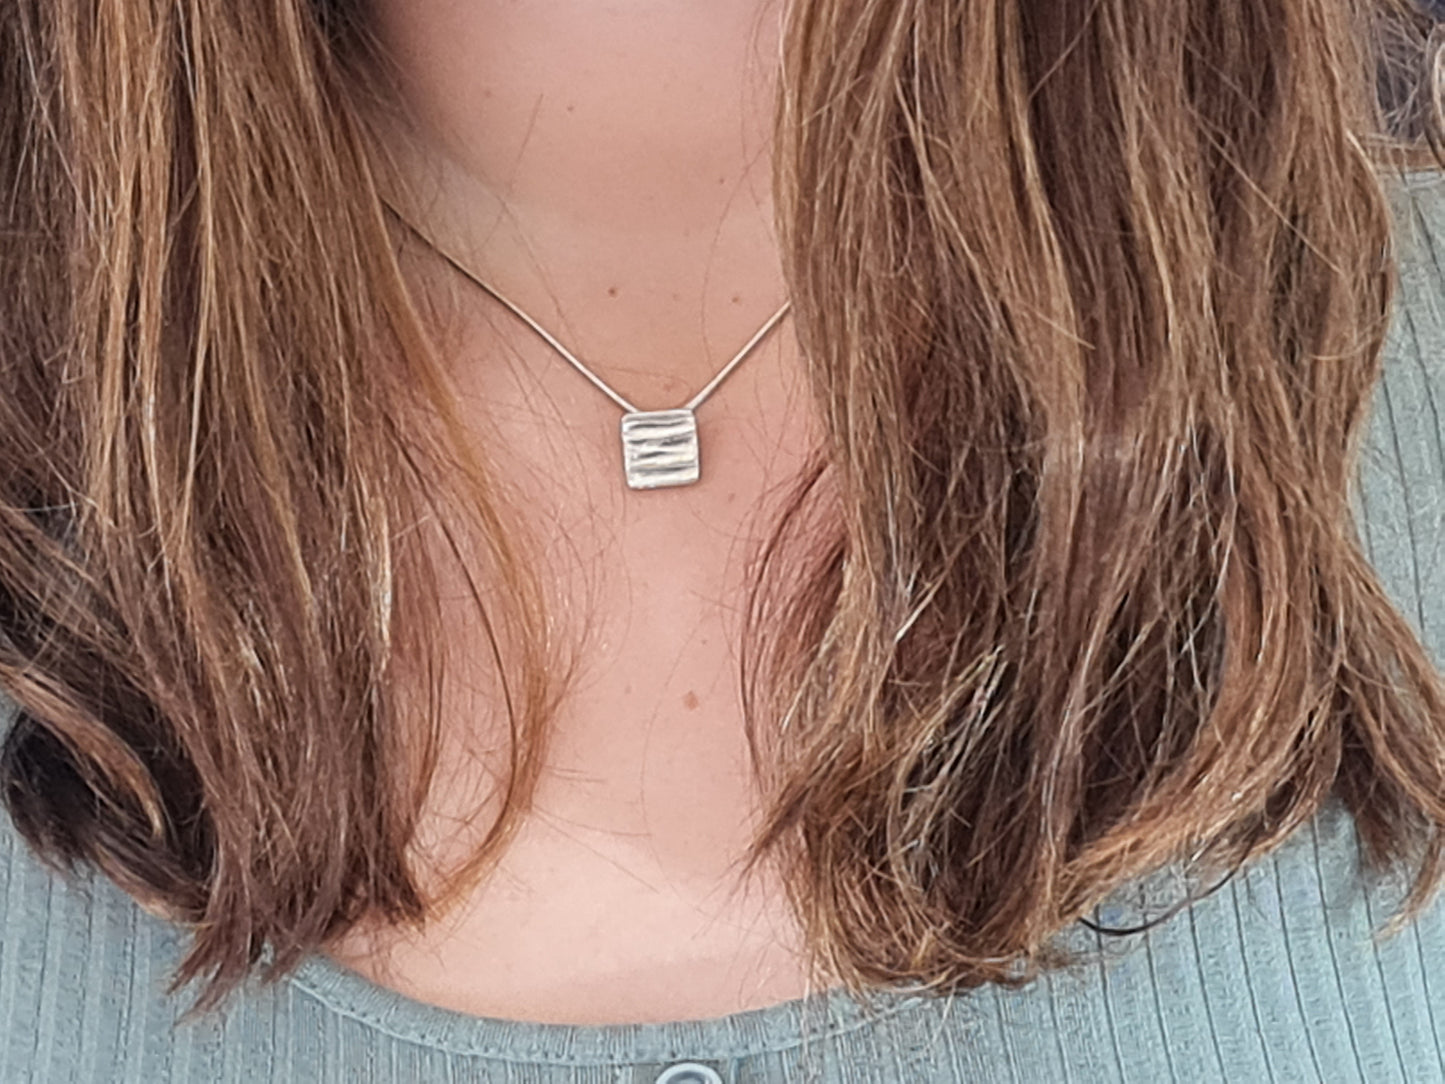 Henhurst polished silver small square pendant necklace modelled on female neck